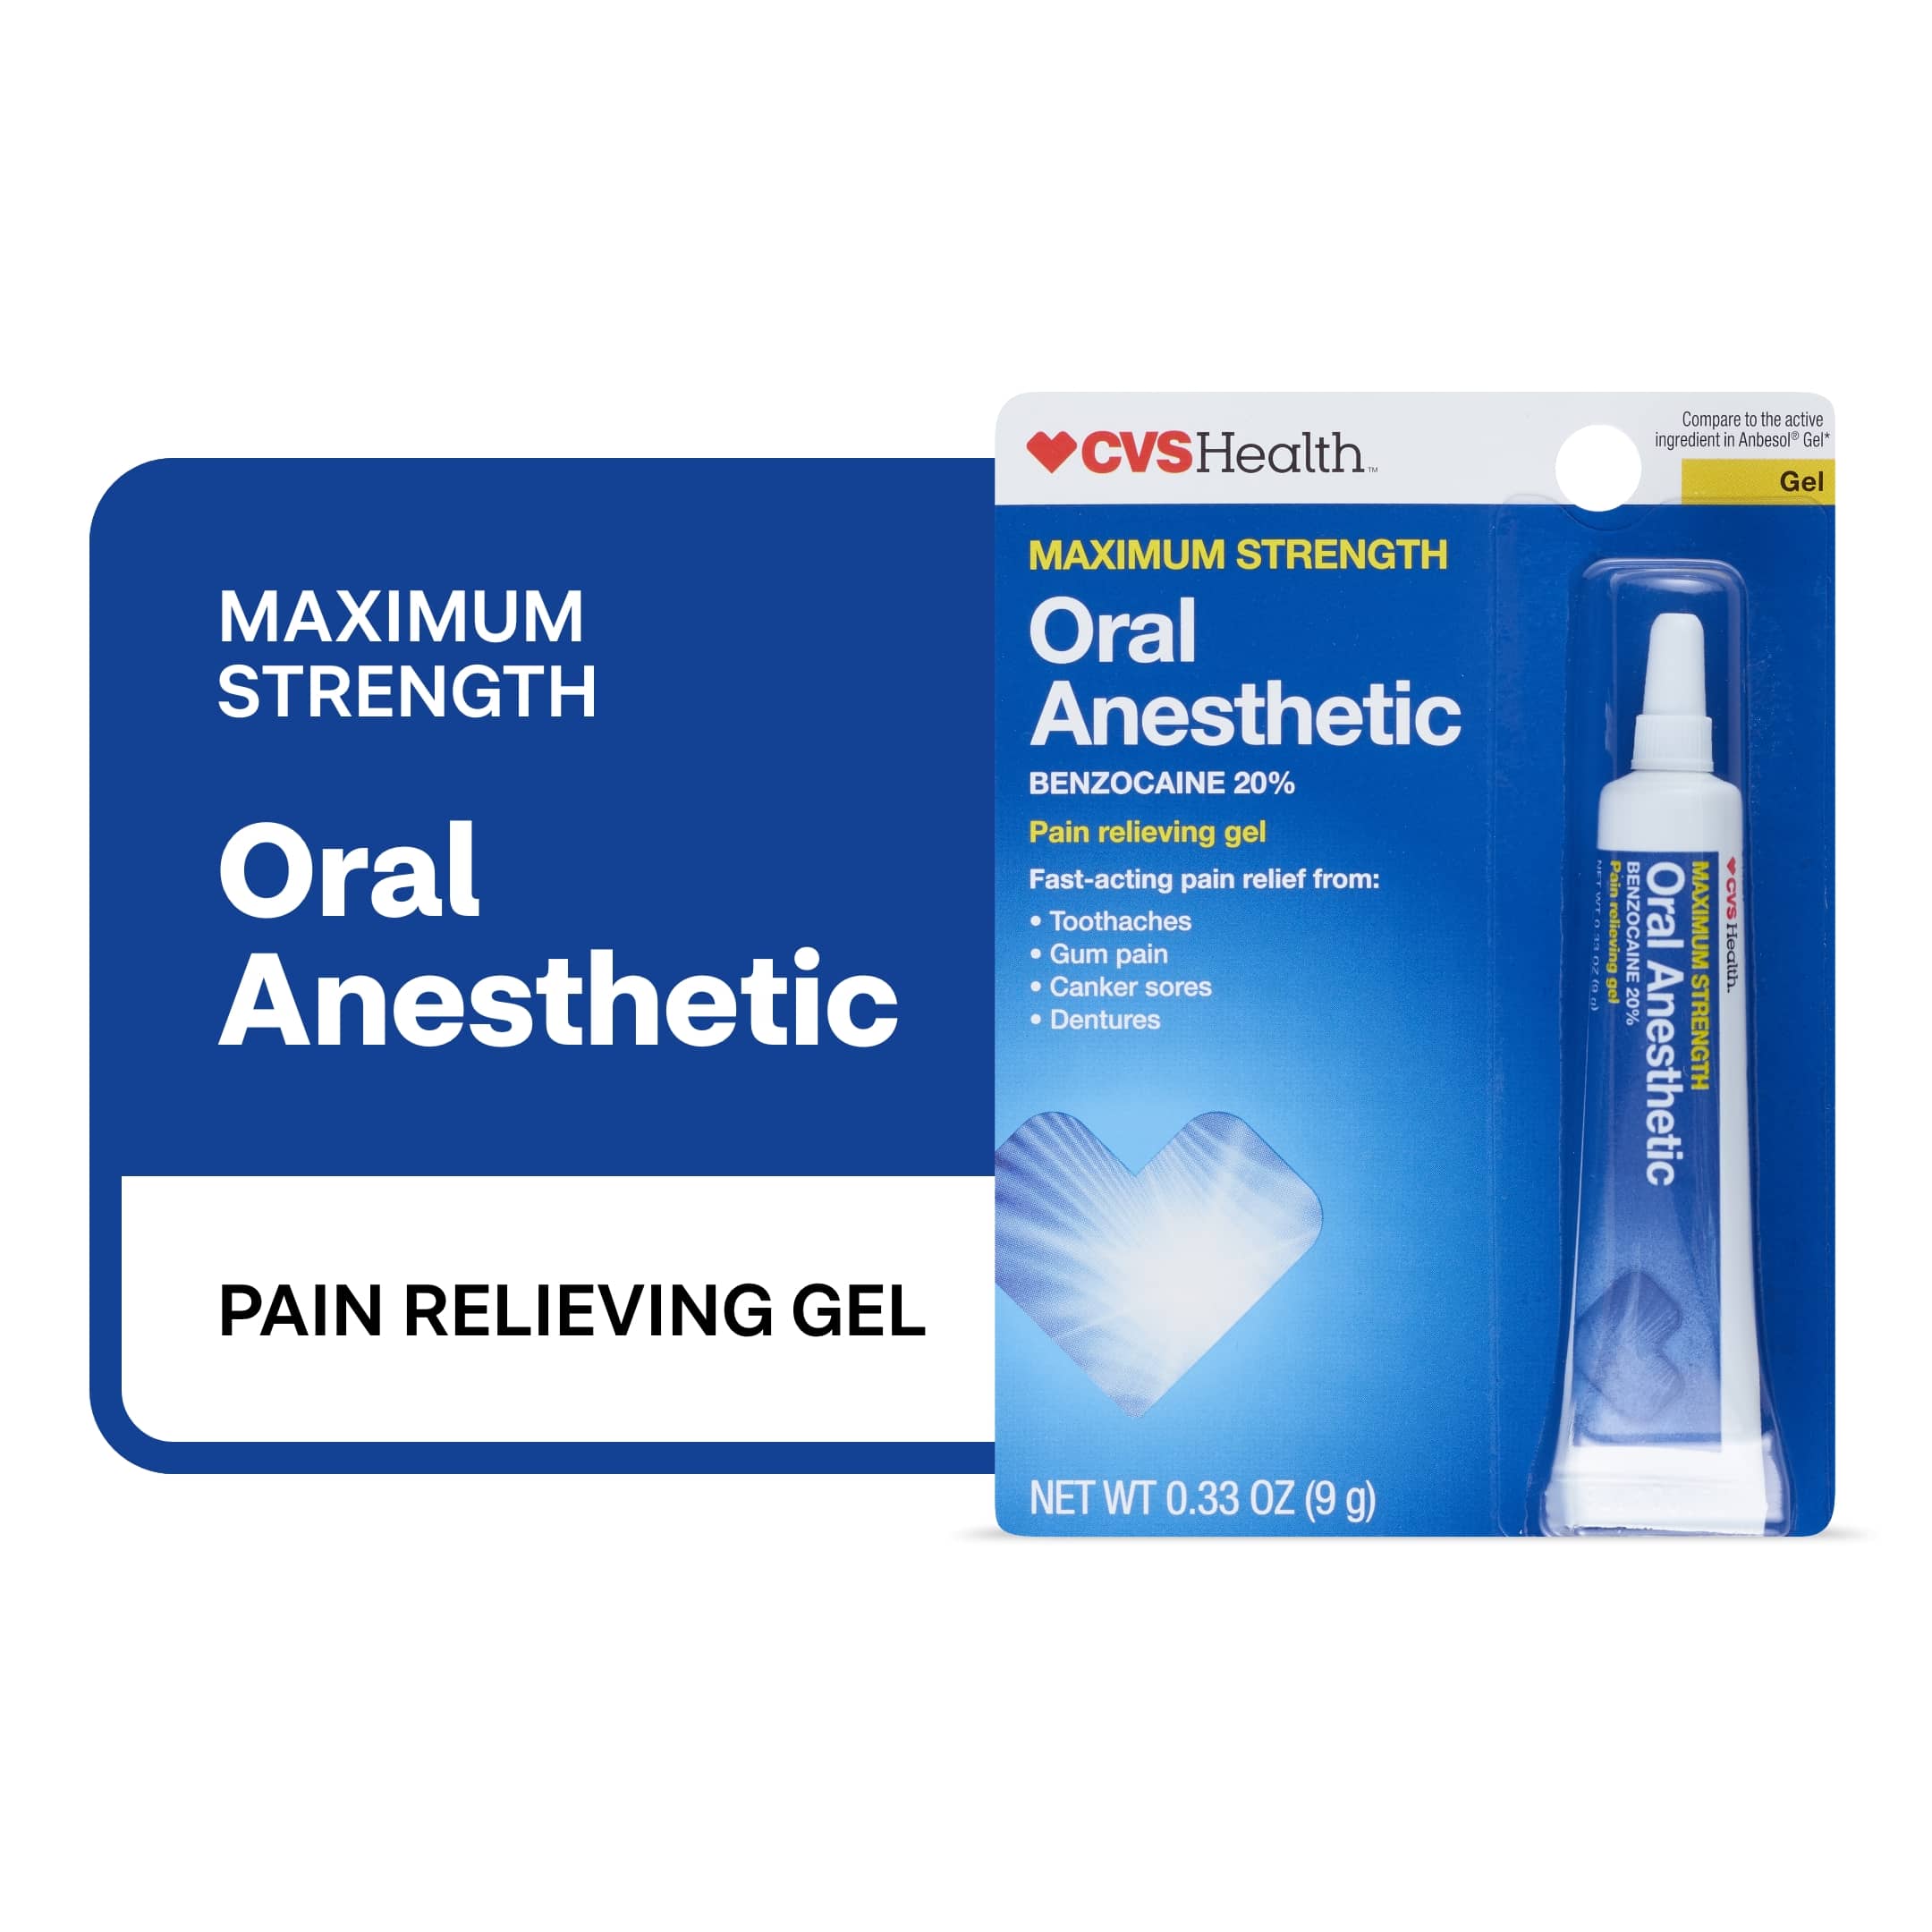 CVS Health Oral Anesthetic, Benzocaine 20% Maximum Strength Pain Relieving Gel - 0.33 Oz